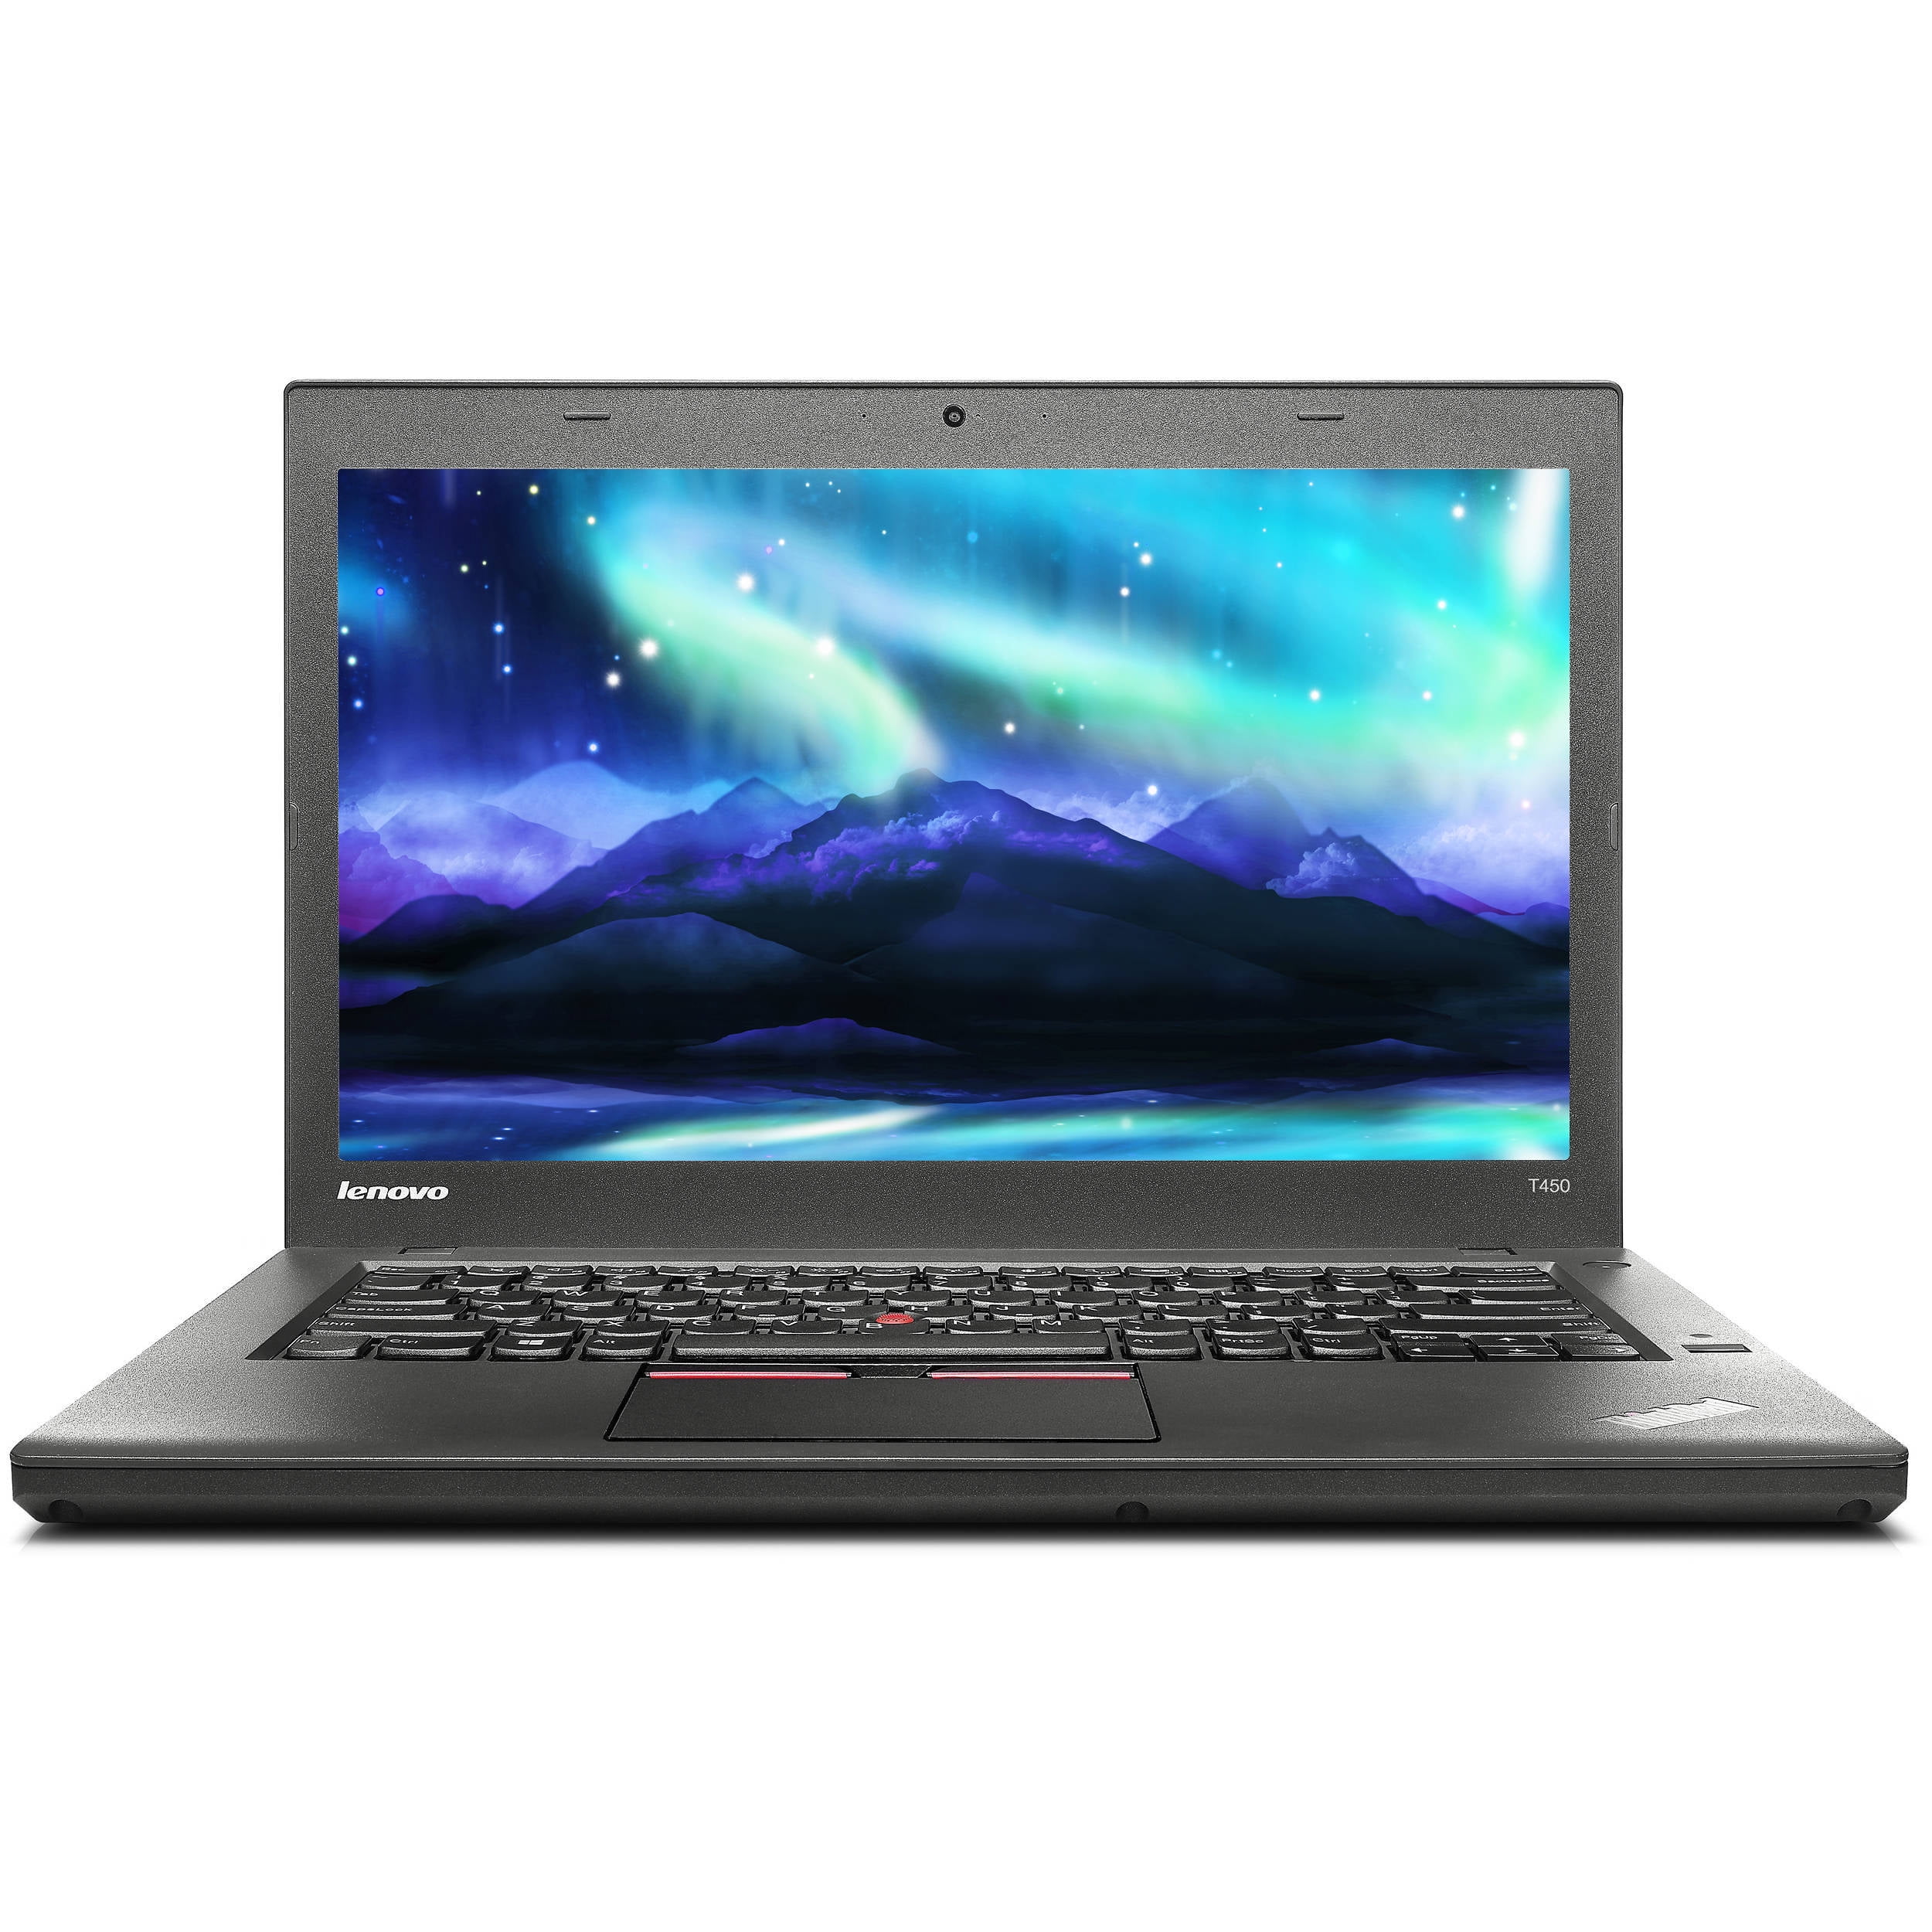 En skønne dag skrubbe dommer Restored Lenovo ThinkPad T450 14" Laptop Intel Core i5 2.3 GHz 8GB RAM  128GB SSD Webcam Windows 10 Professional - Laptop Notebook (Refurbished) -  Walmart.com